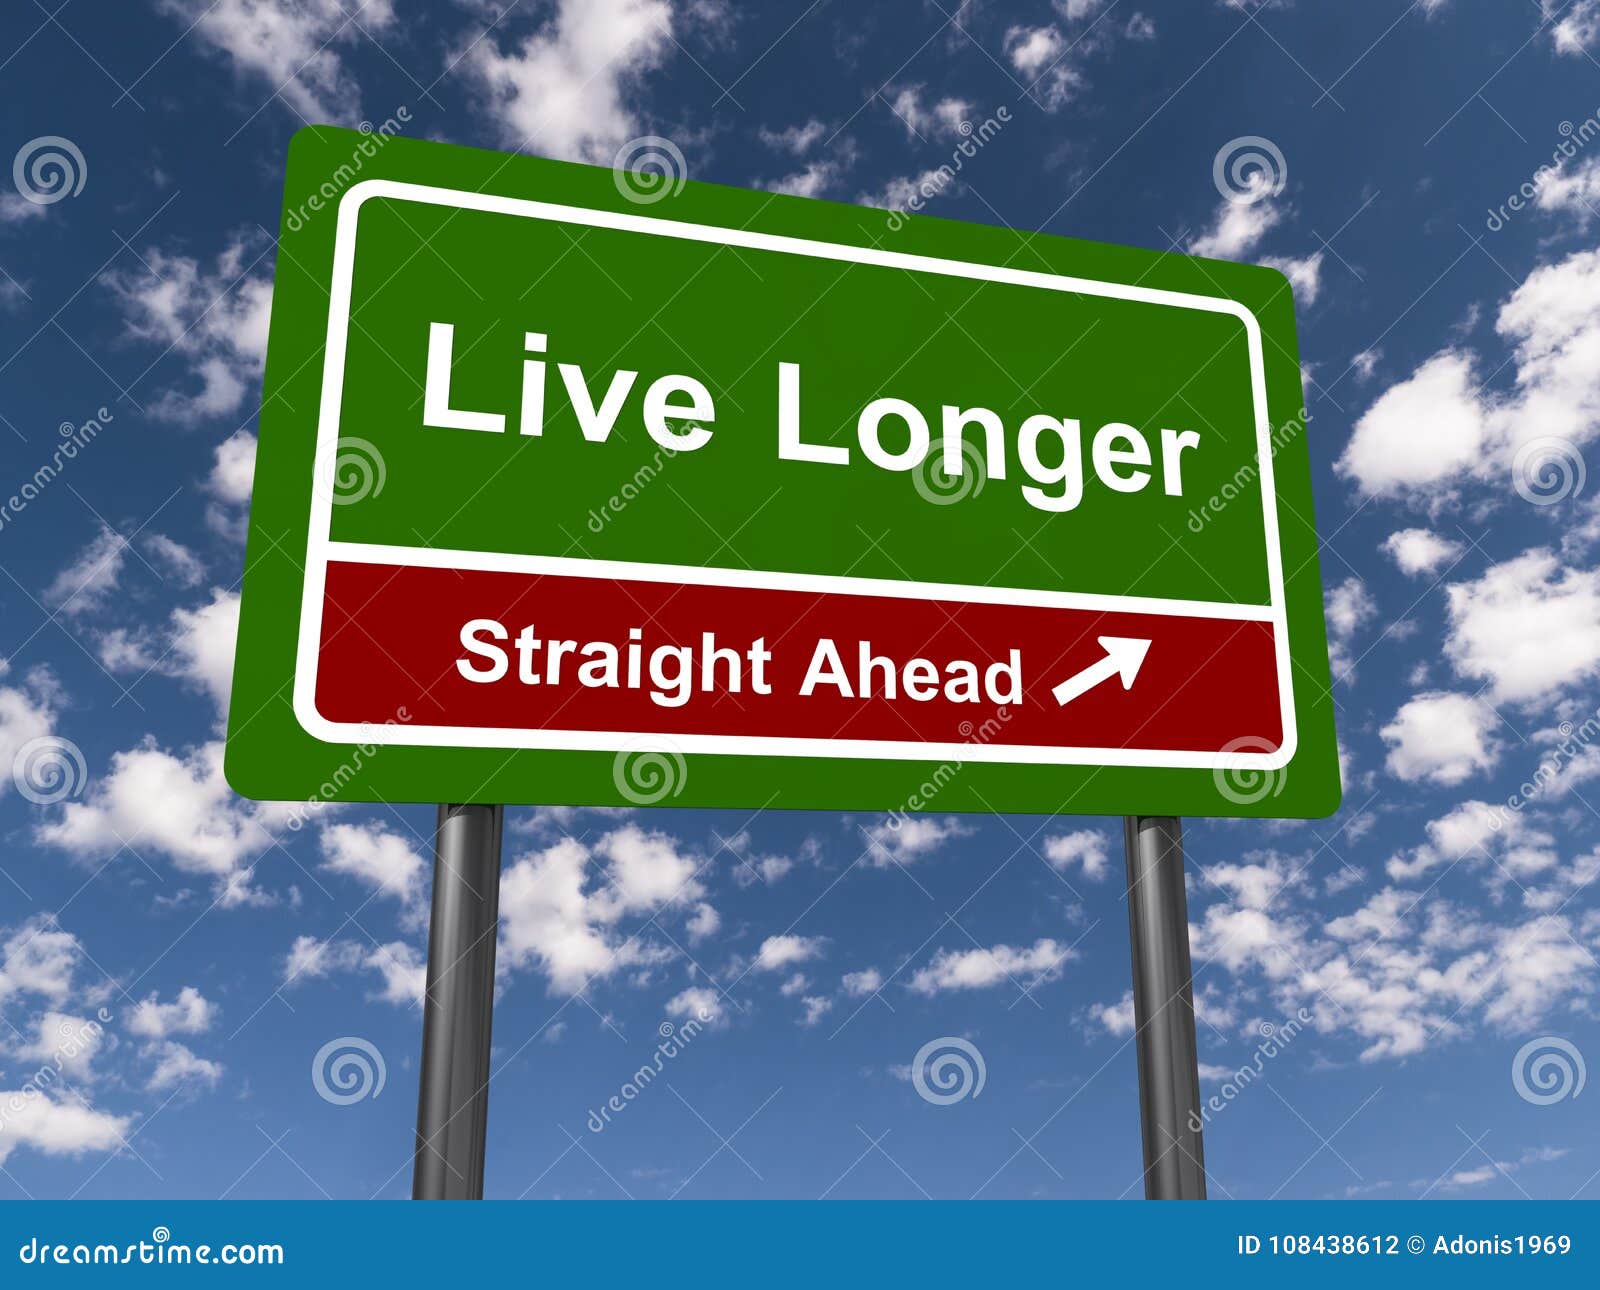 live longer straight ahead